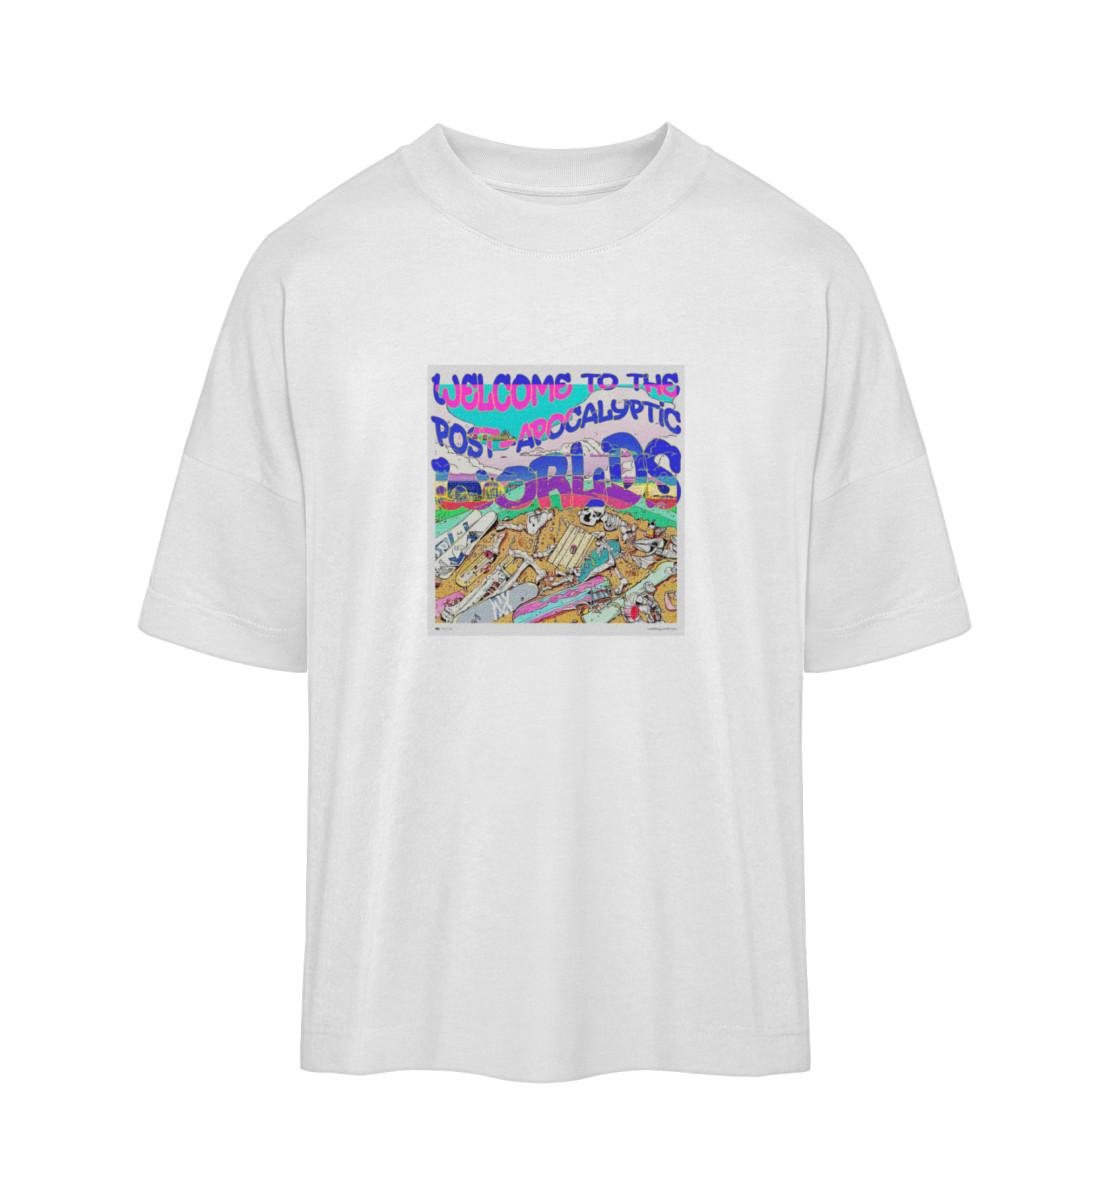 T-shirt Oversize Other Worlds 05 - Organic Oversized Shirt ST/ST-3